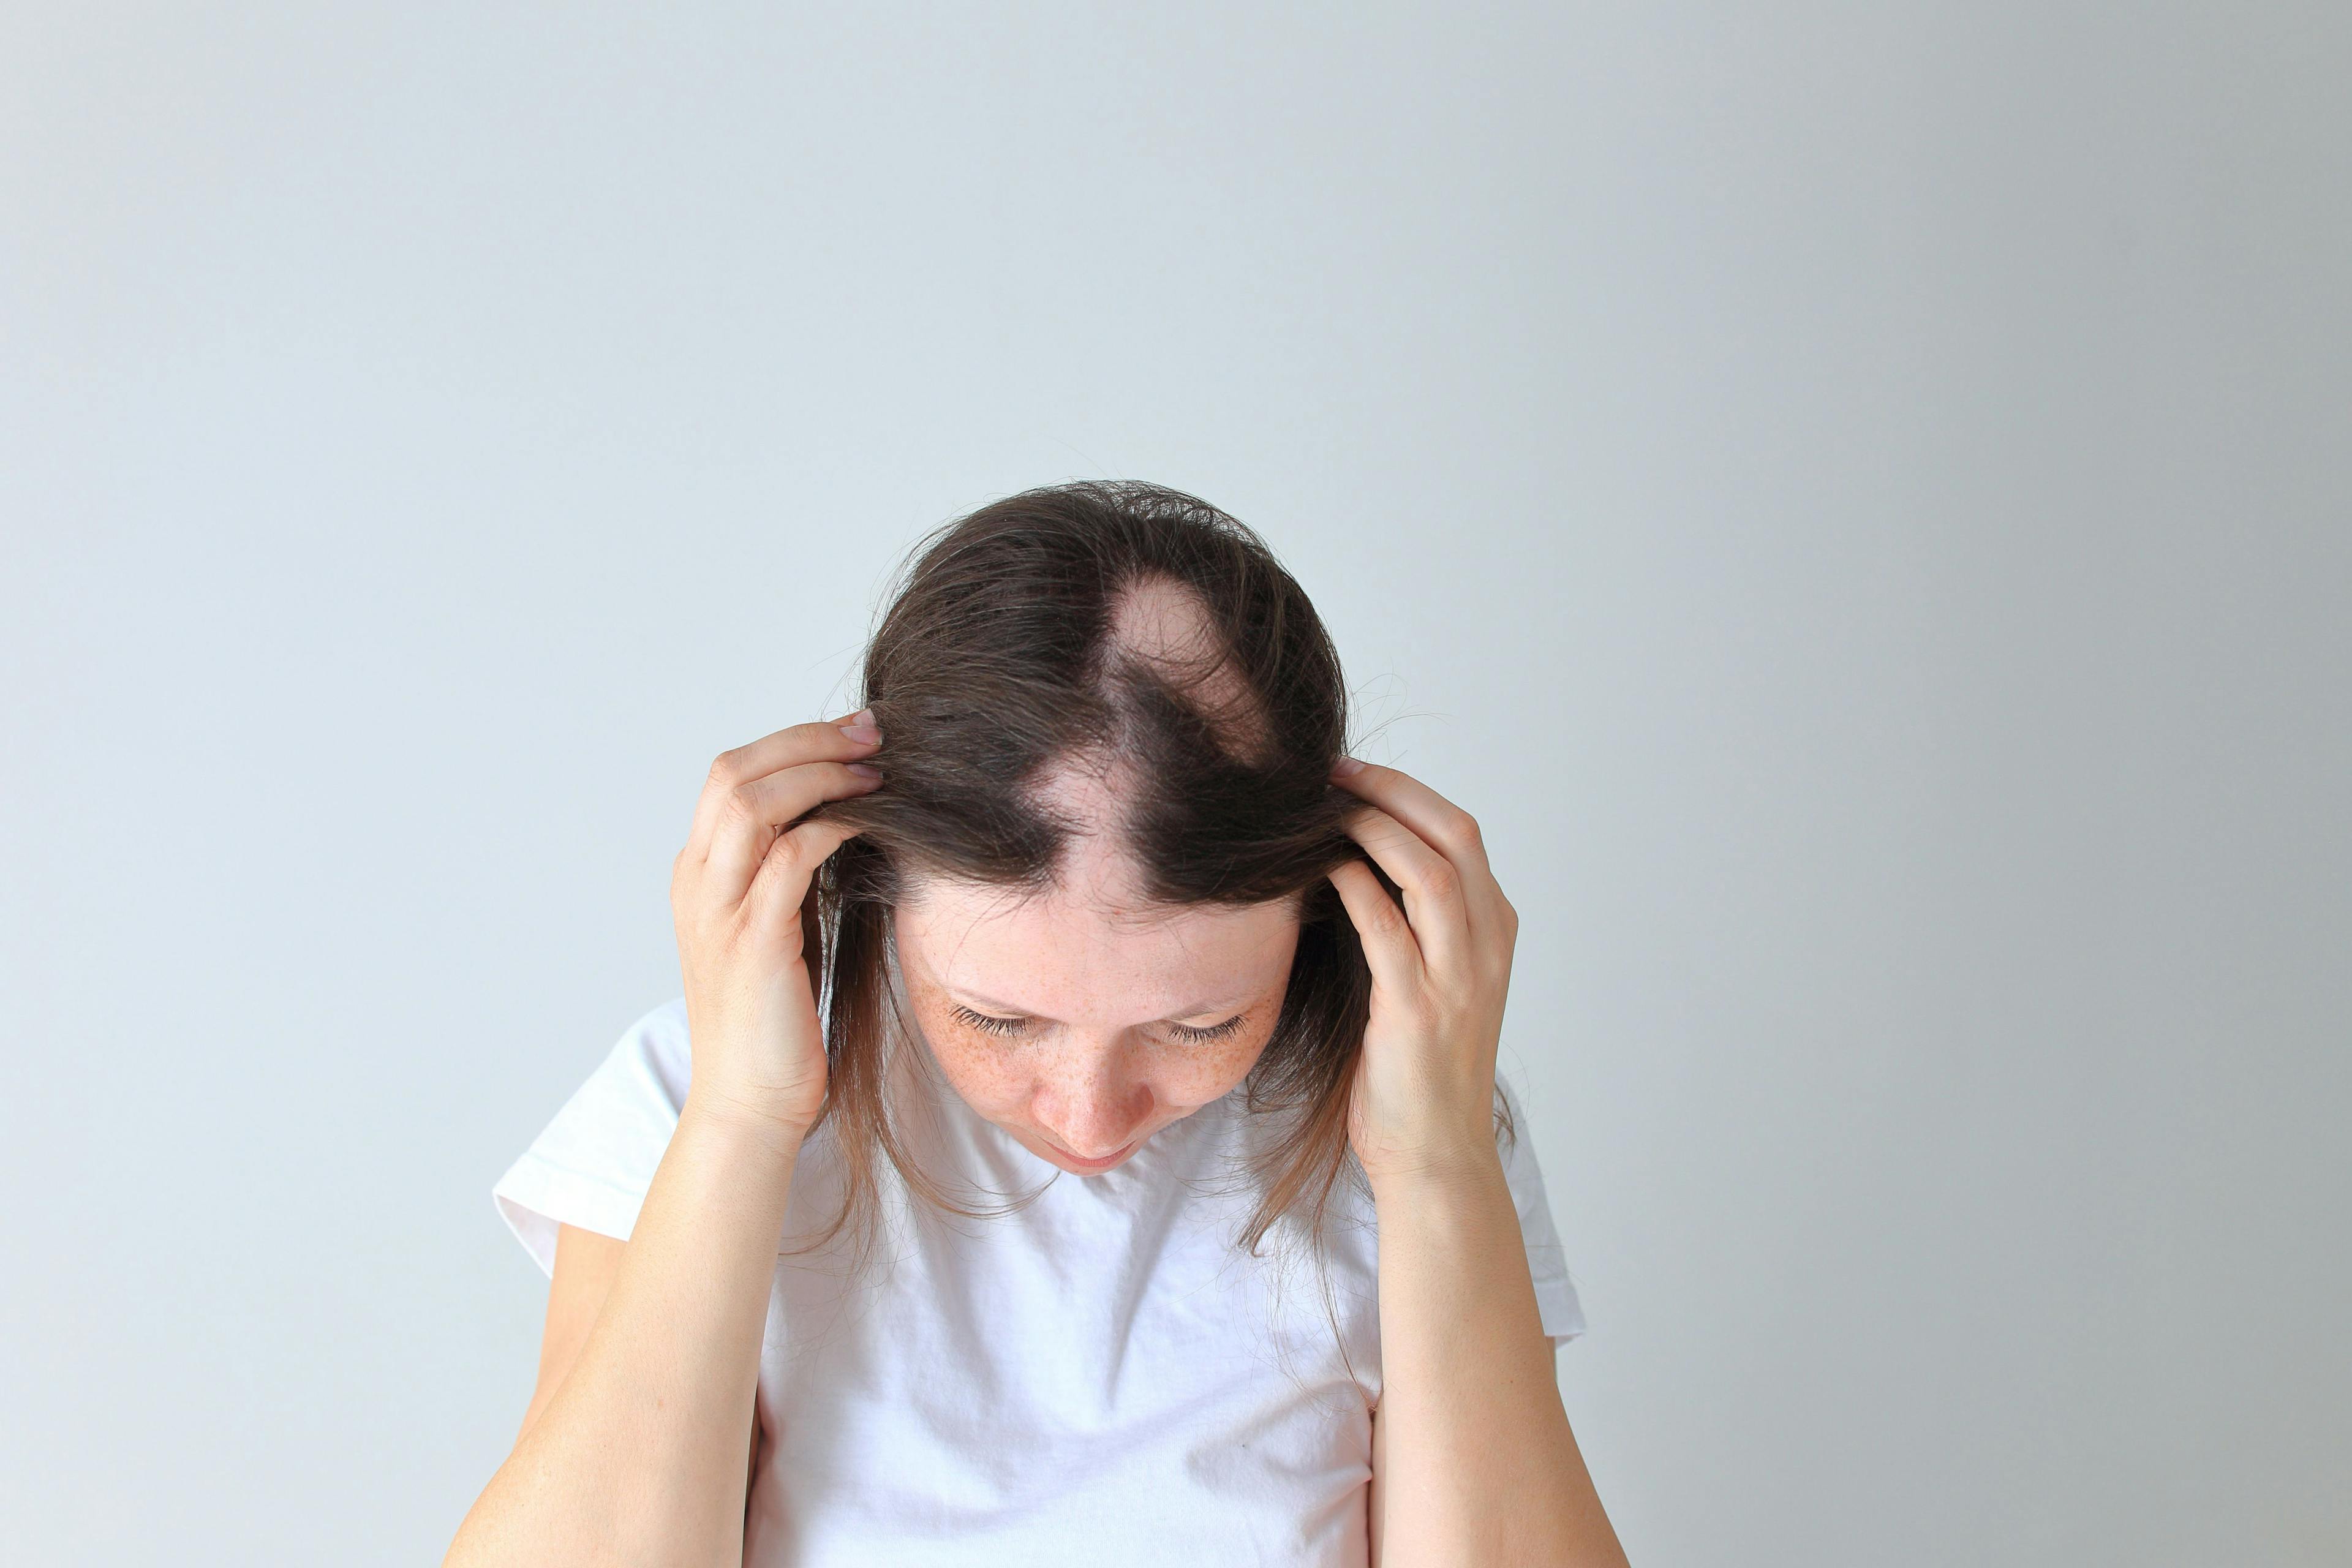 Real alopecia areata in a young girl | Image credit: Nadya Kolobova - stock.adobe.com